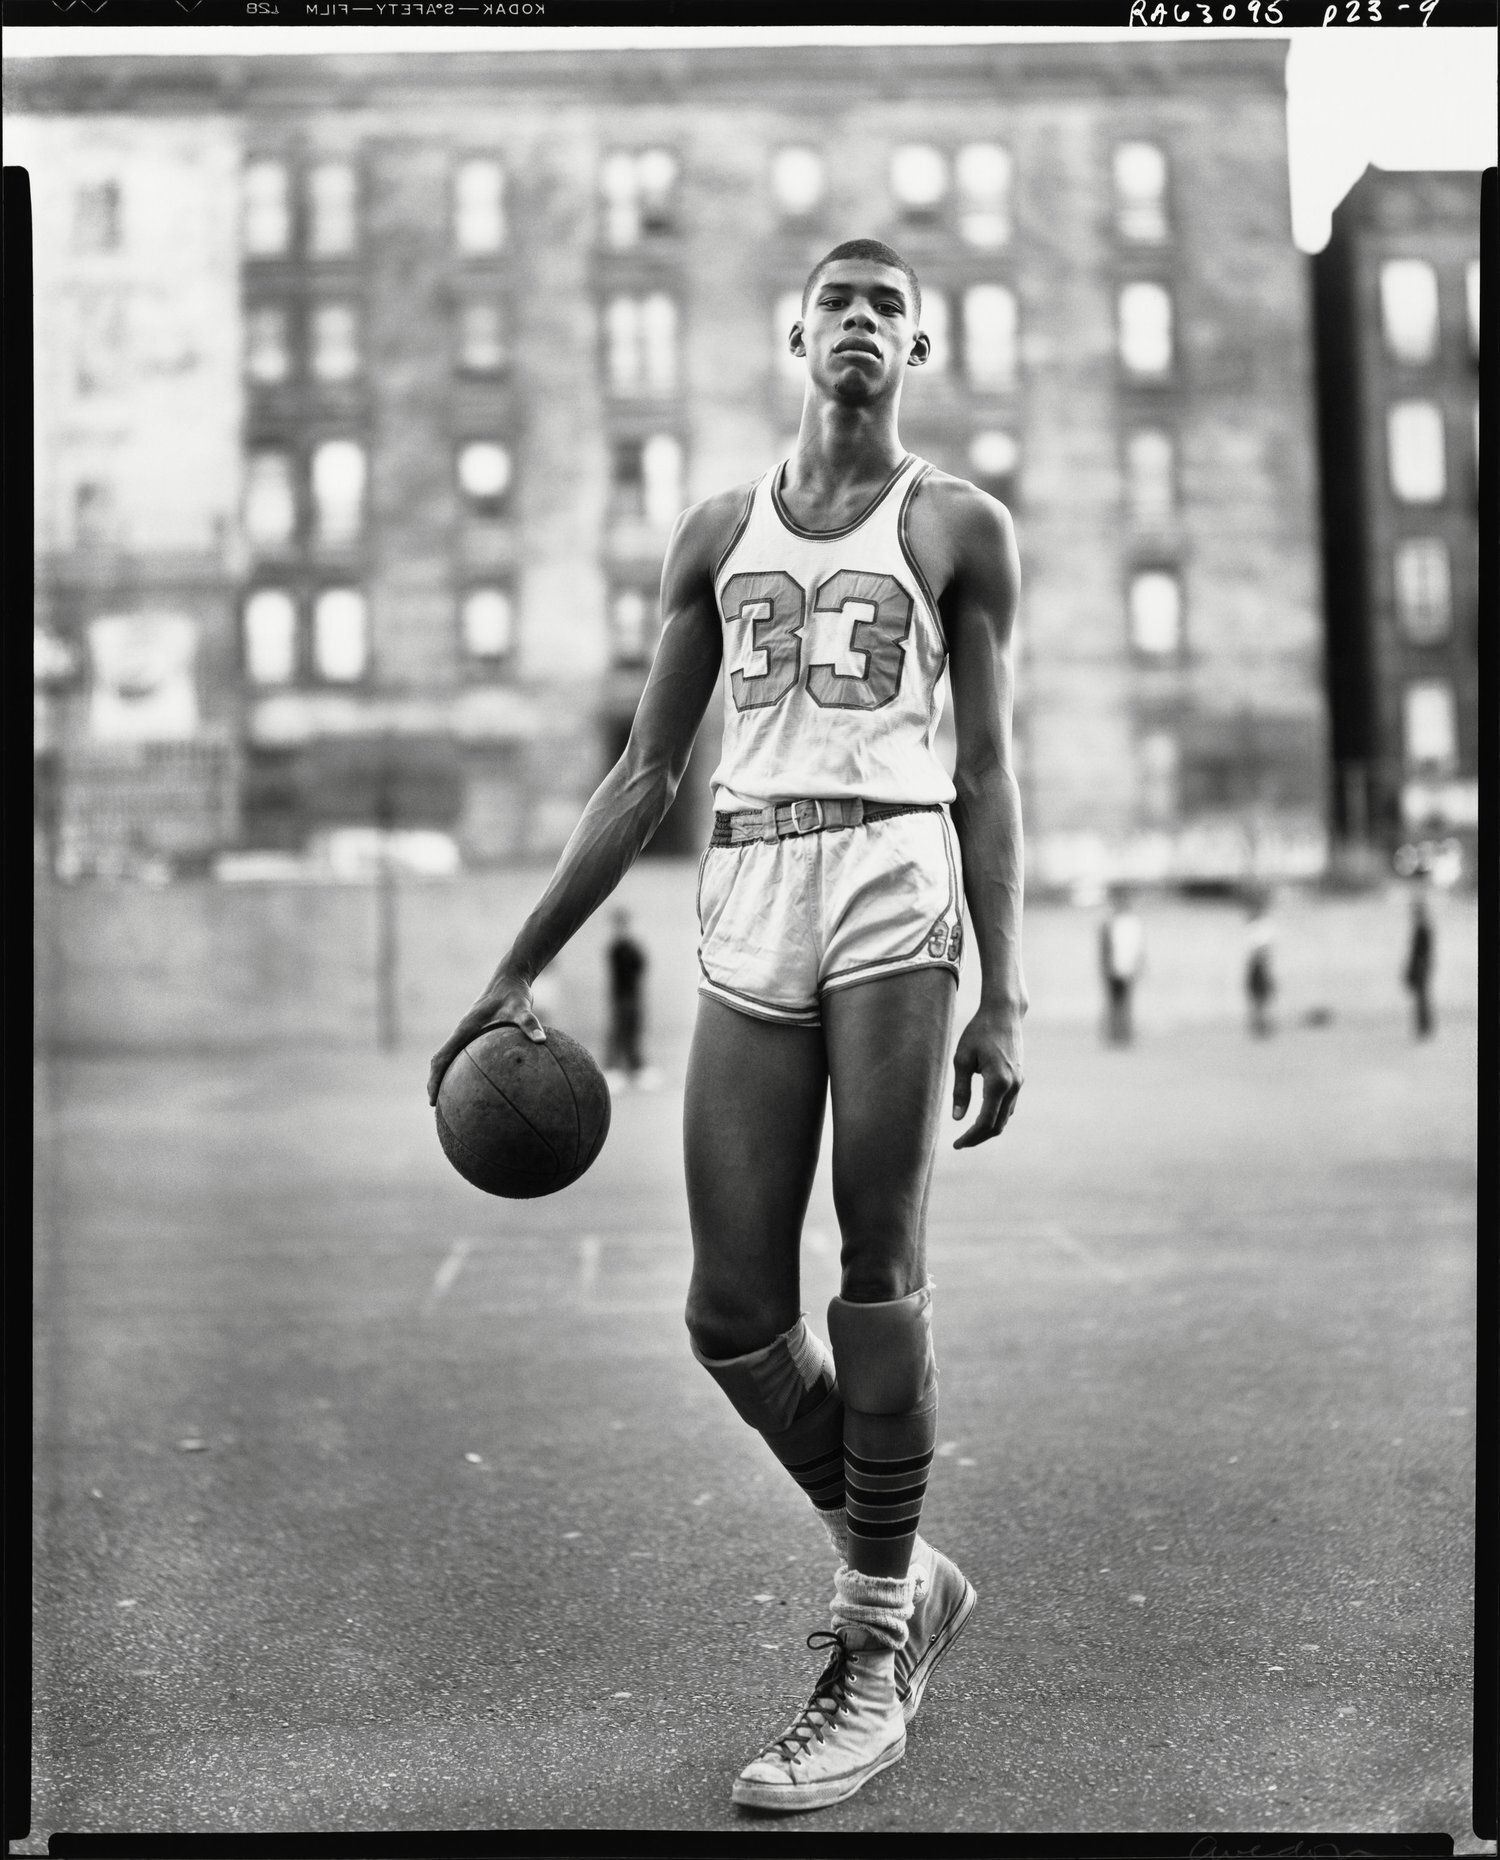 Lew+Alcindor,+basketball+player,+61st+Street+and+Amsterdam+Avenue,+New+York,+May+2,+1963+-+105.2_rfp.jpg